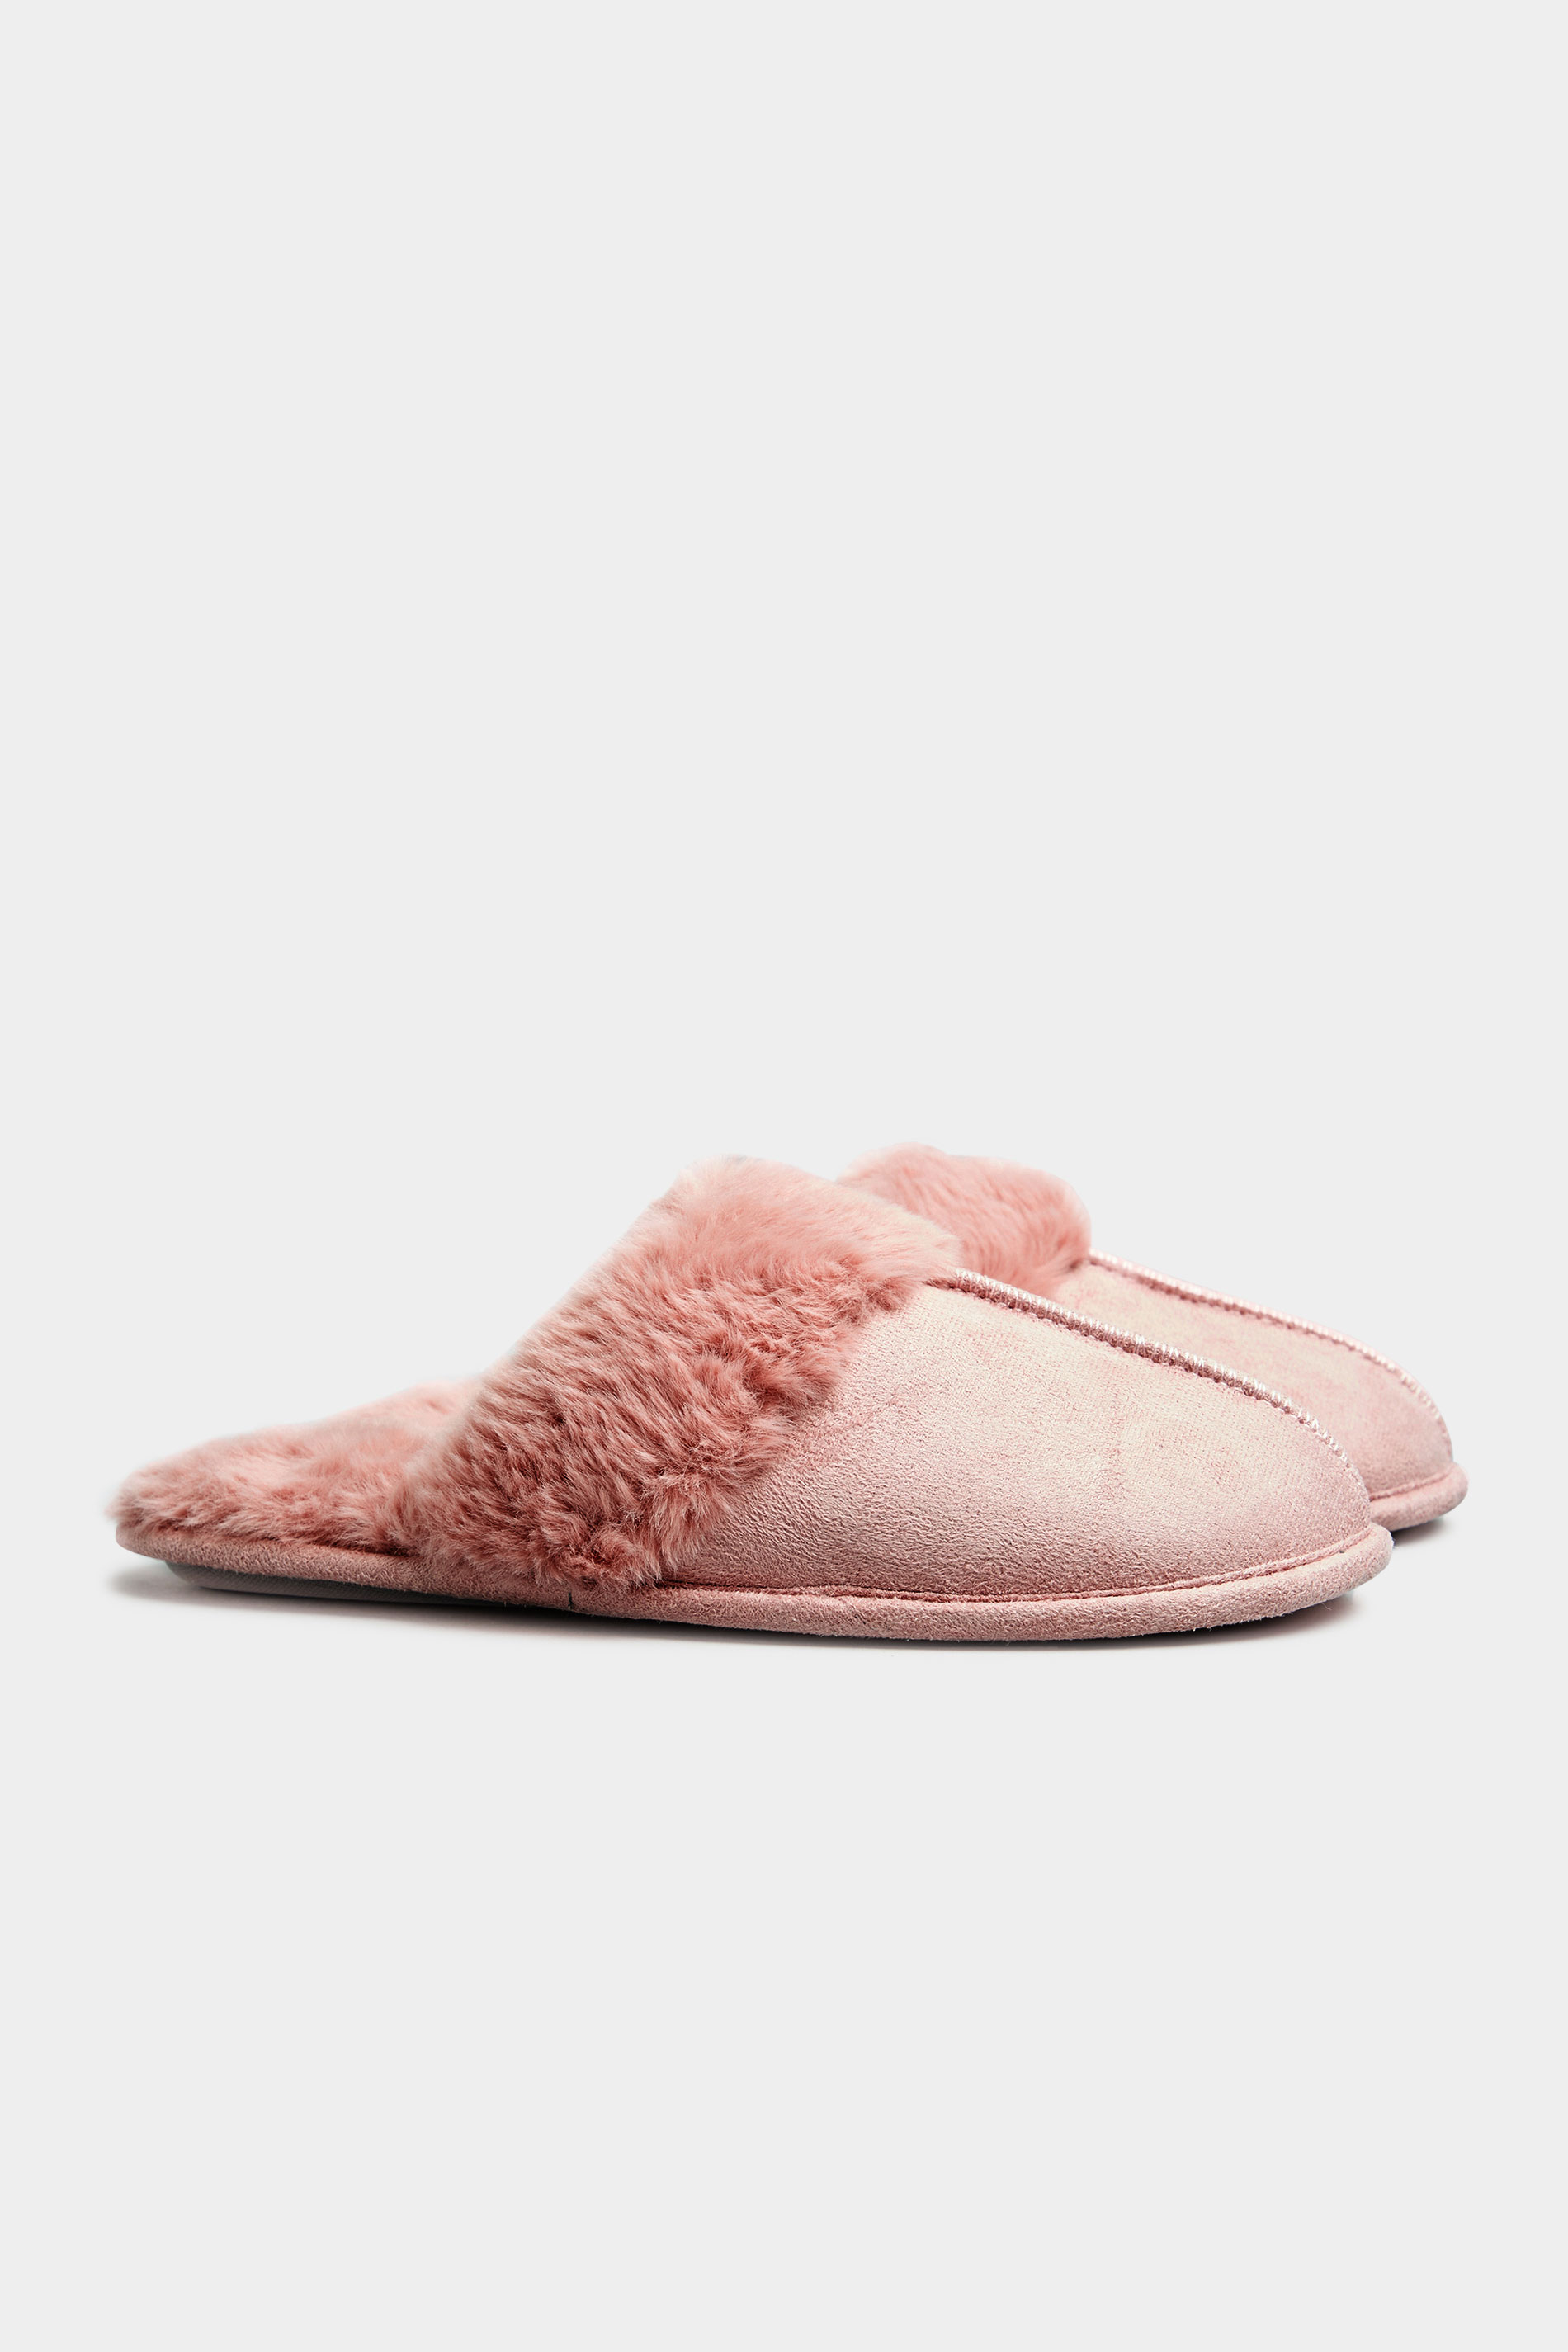 Pink Fur Cuff Mule Slippers In Extra Wide Fit_C.jpg